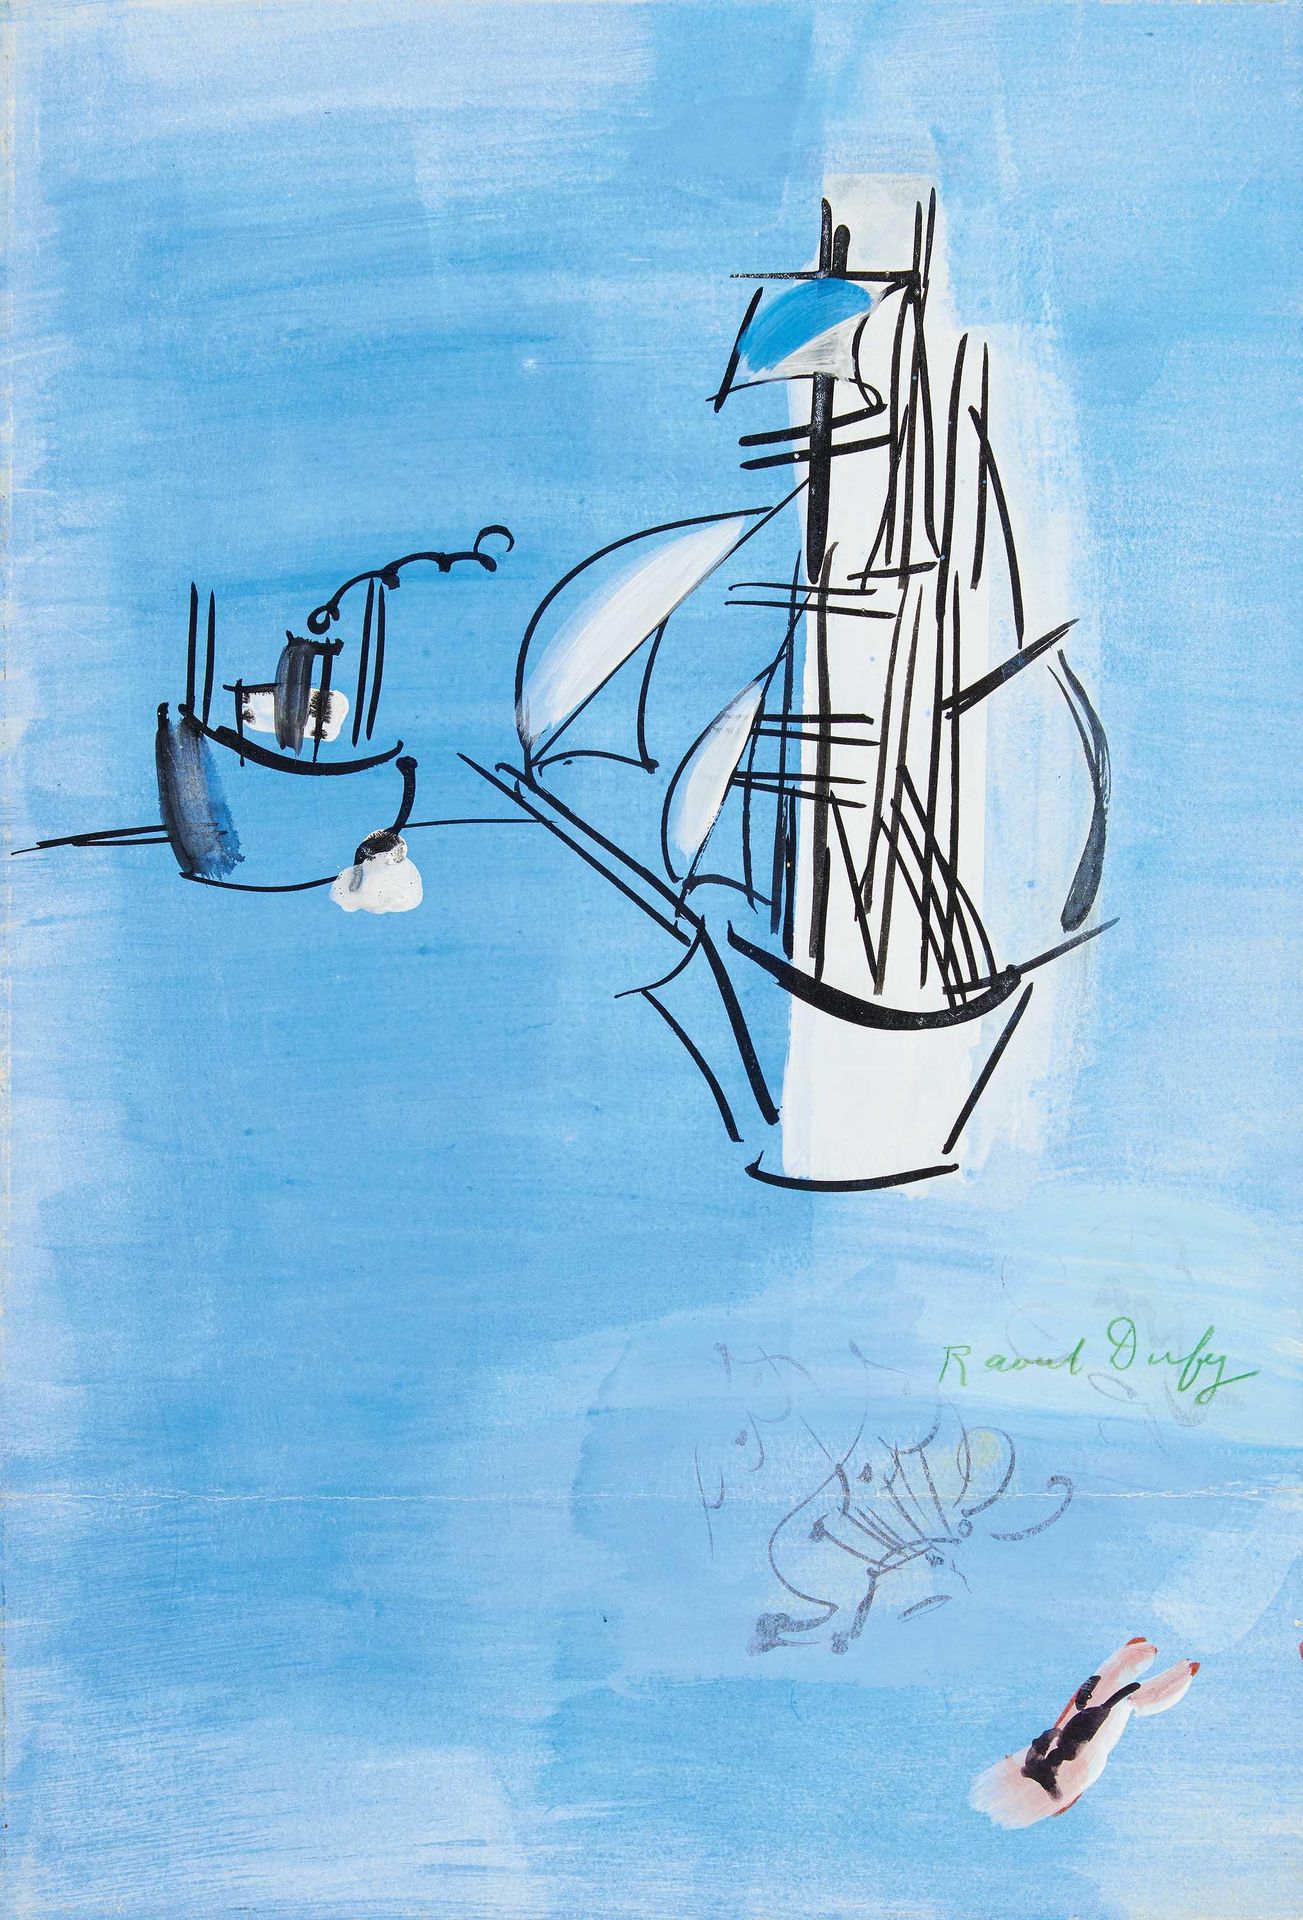 Raoul Dufy 杜菲，拉乌尔
1877年 勒阿弗尔 - 1953年 福尔卡尔基耶

标题：帆船和海鸥 
日期约。1924/25. 
技术：纸上水彩和水粉画&hellip;